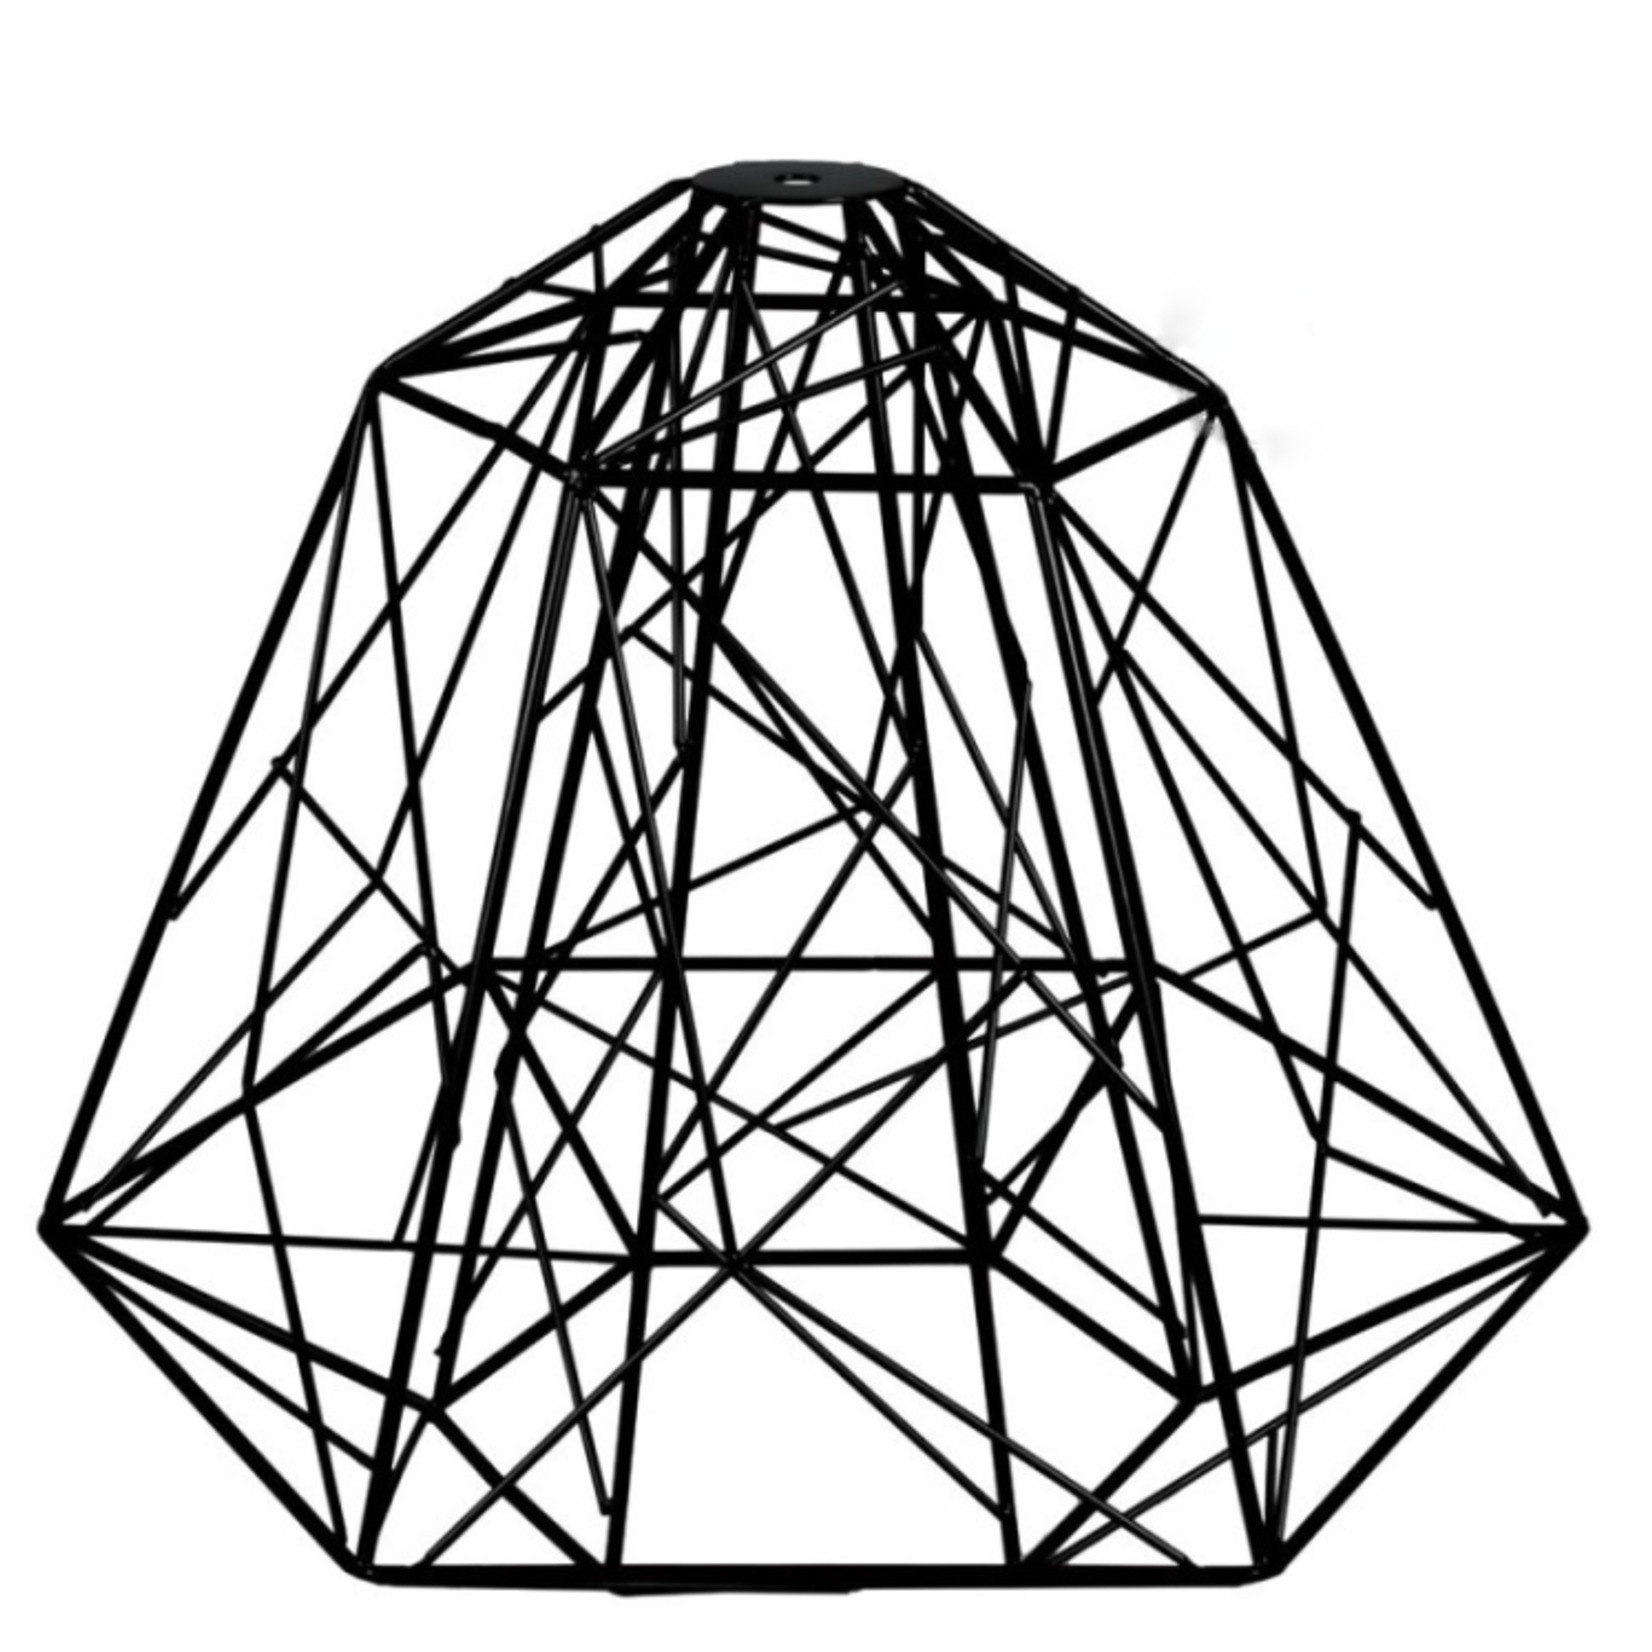 CCIT Large DIAMOND Black Geometric Naked Lampshade XL Bulb Cage - with E27 lamp holder